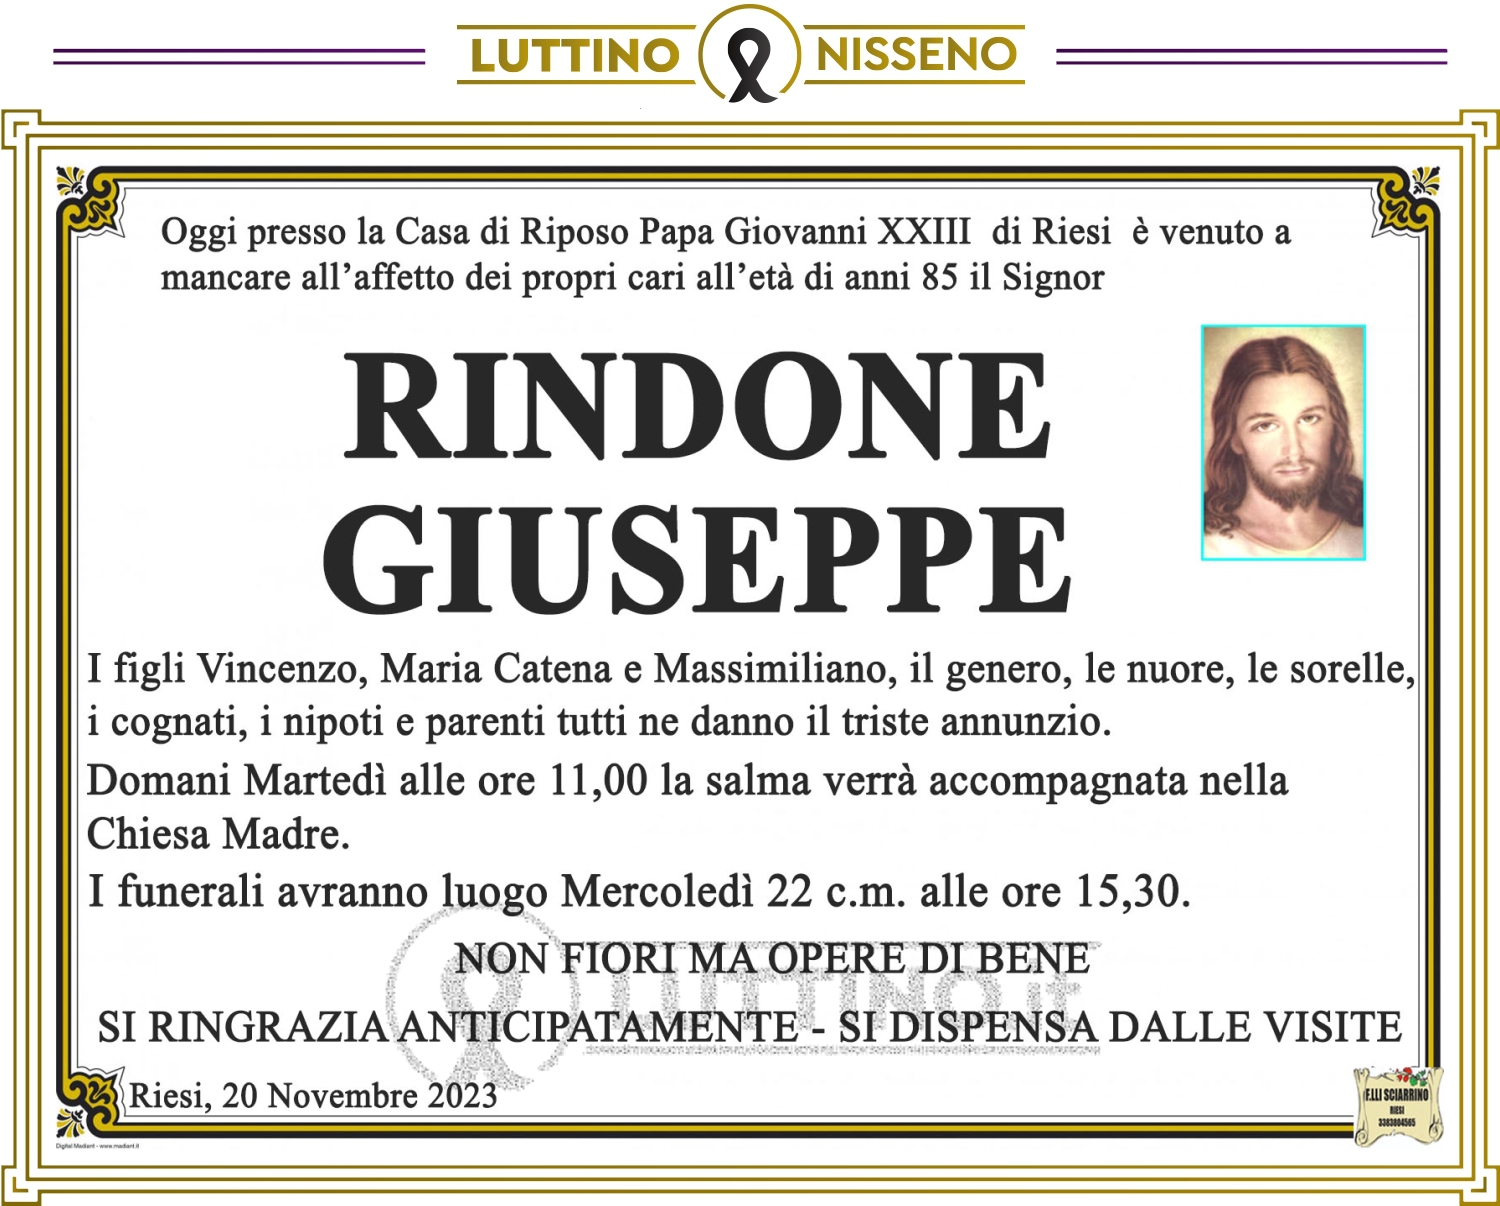 Giuseppe Rindone